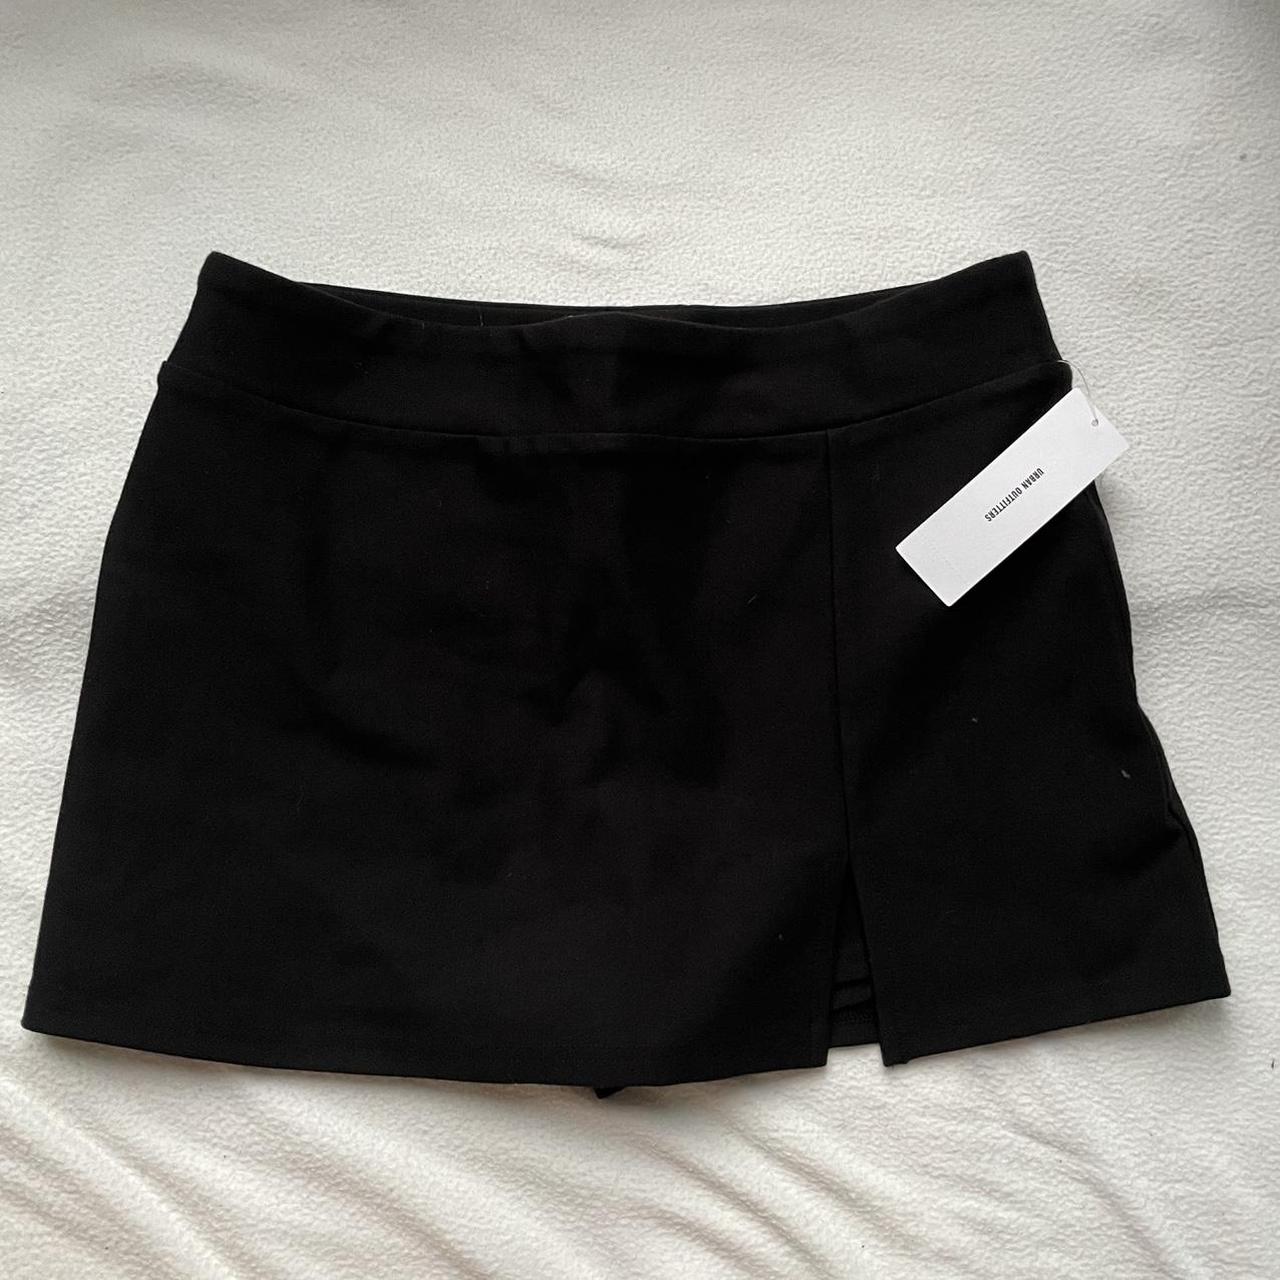 Urban outfitters mini skirt/skort 🖤 Size large,... - Depop